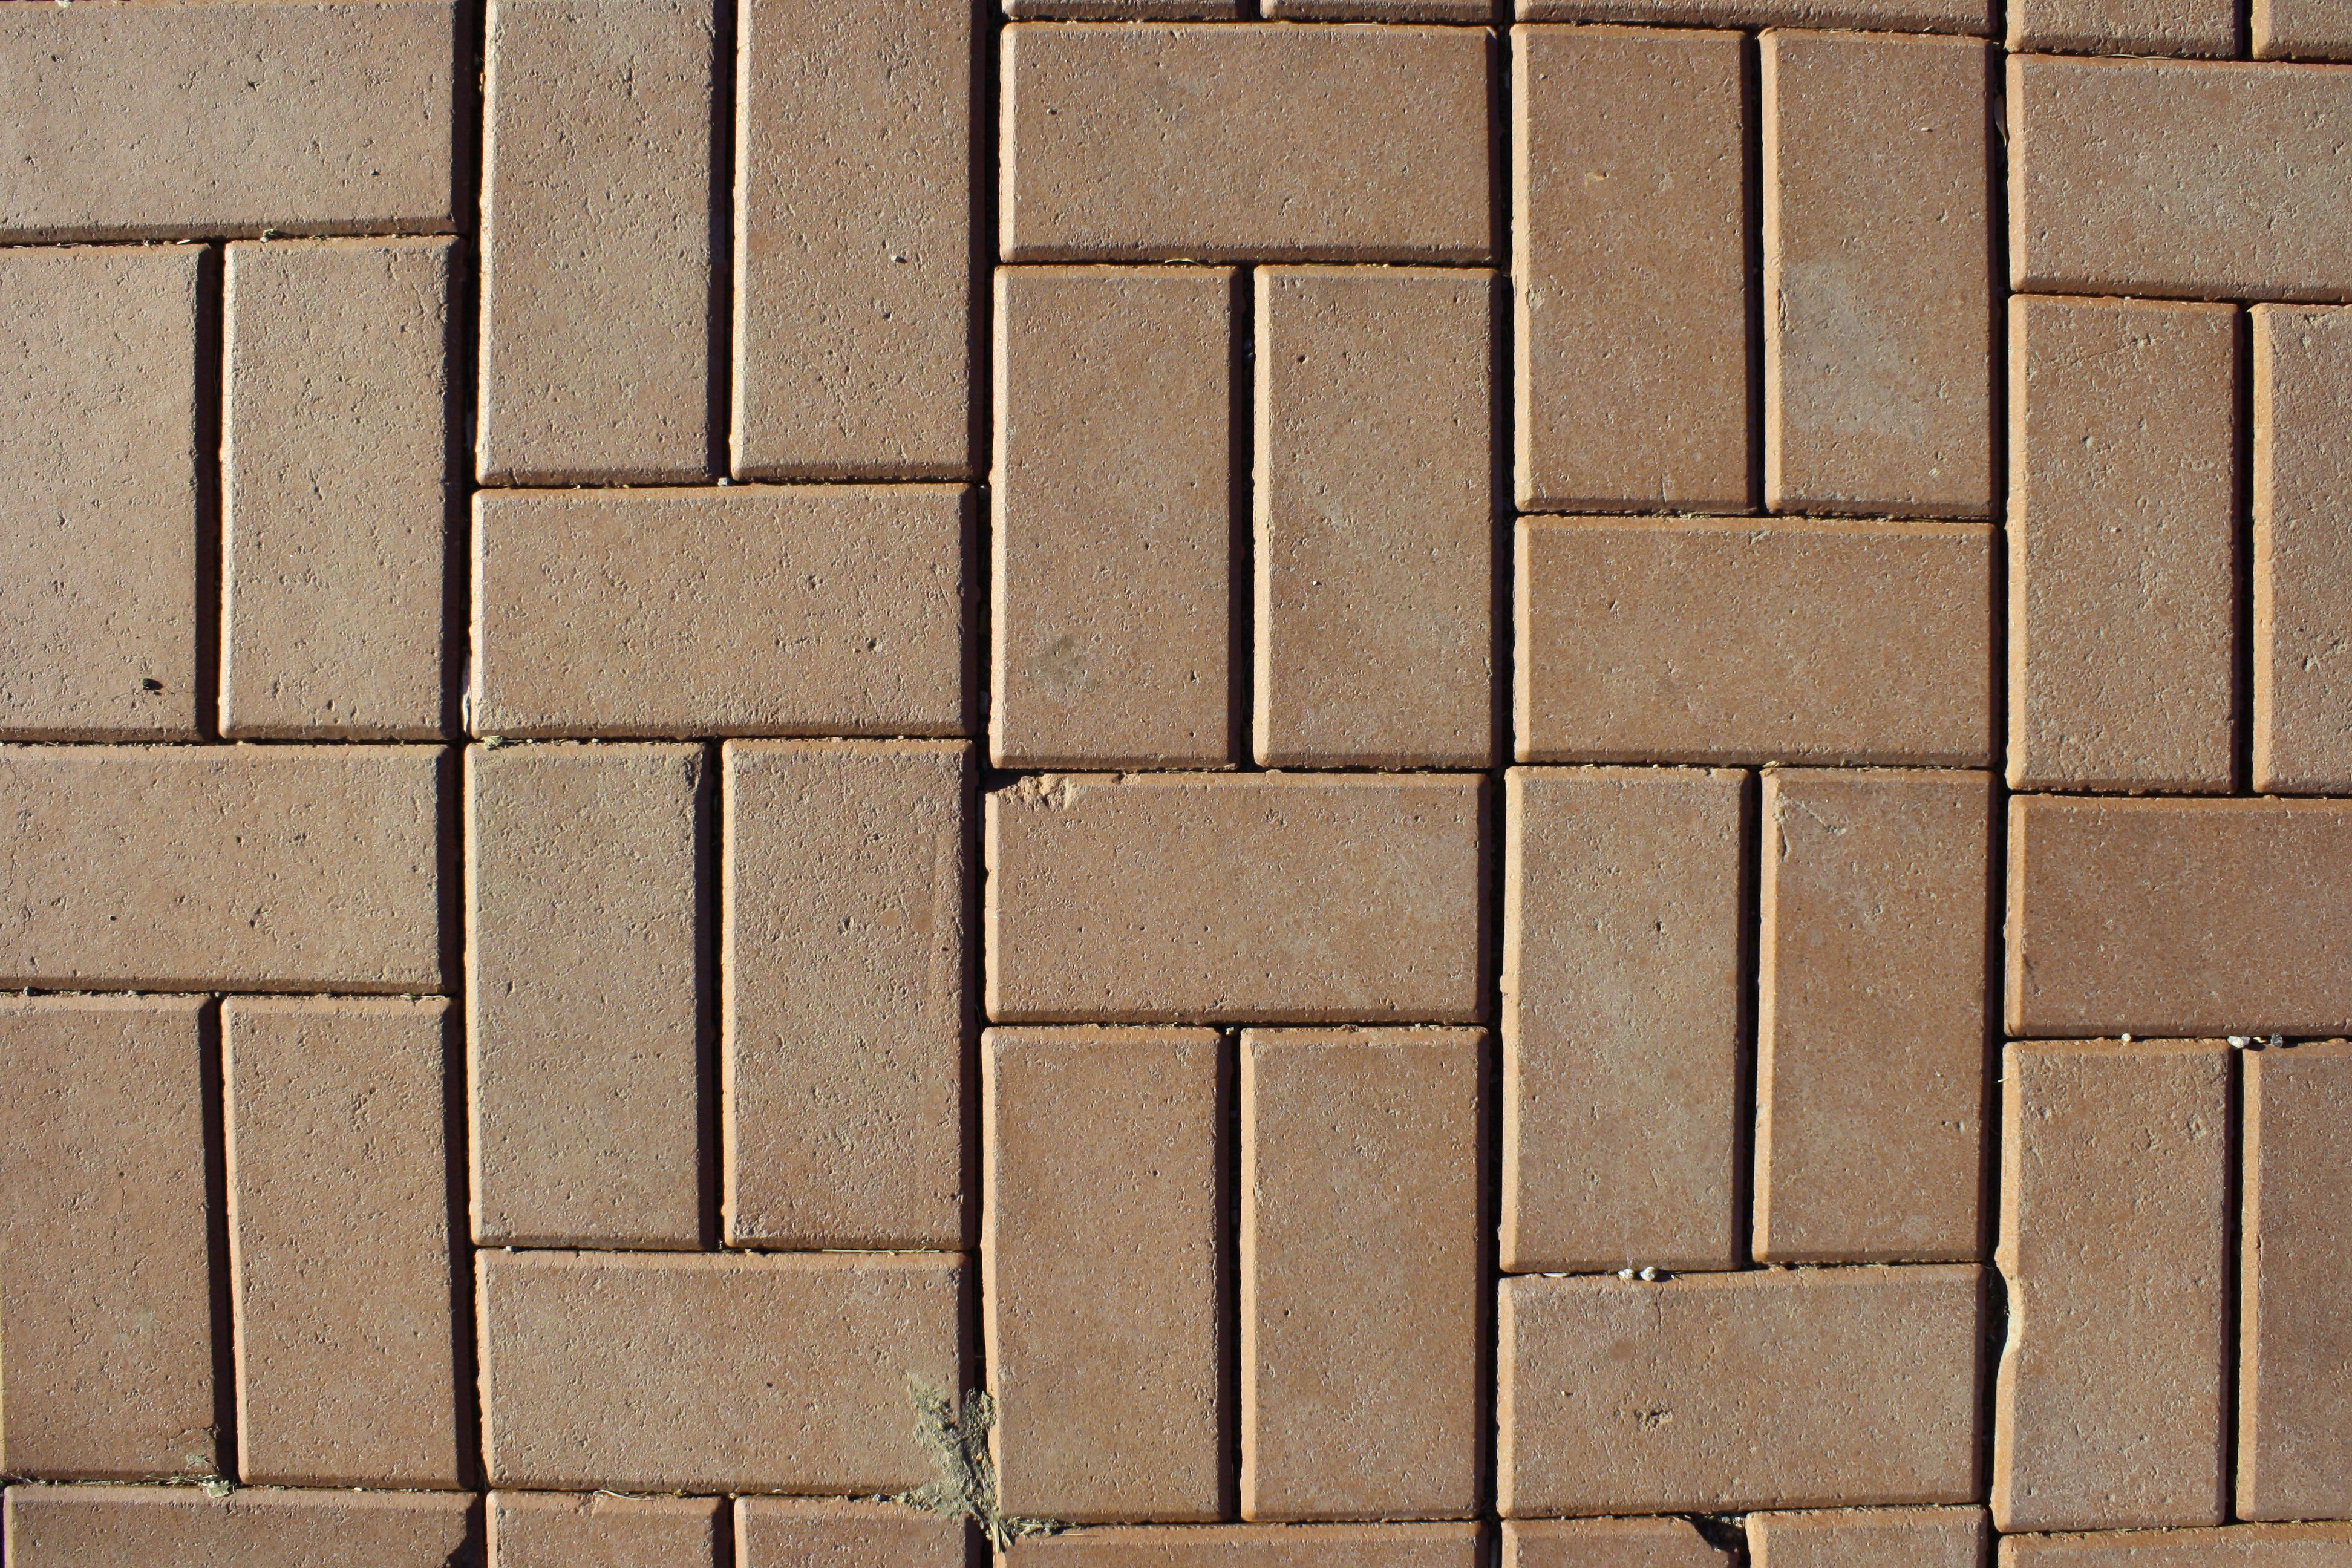 Tan Brick Pavers Sidewalk Texture Picture Free Photograph Photos